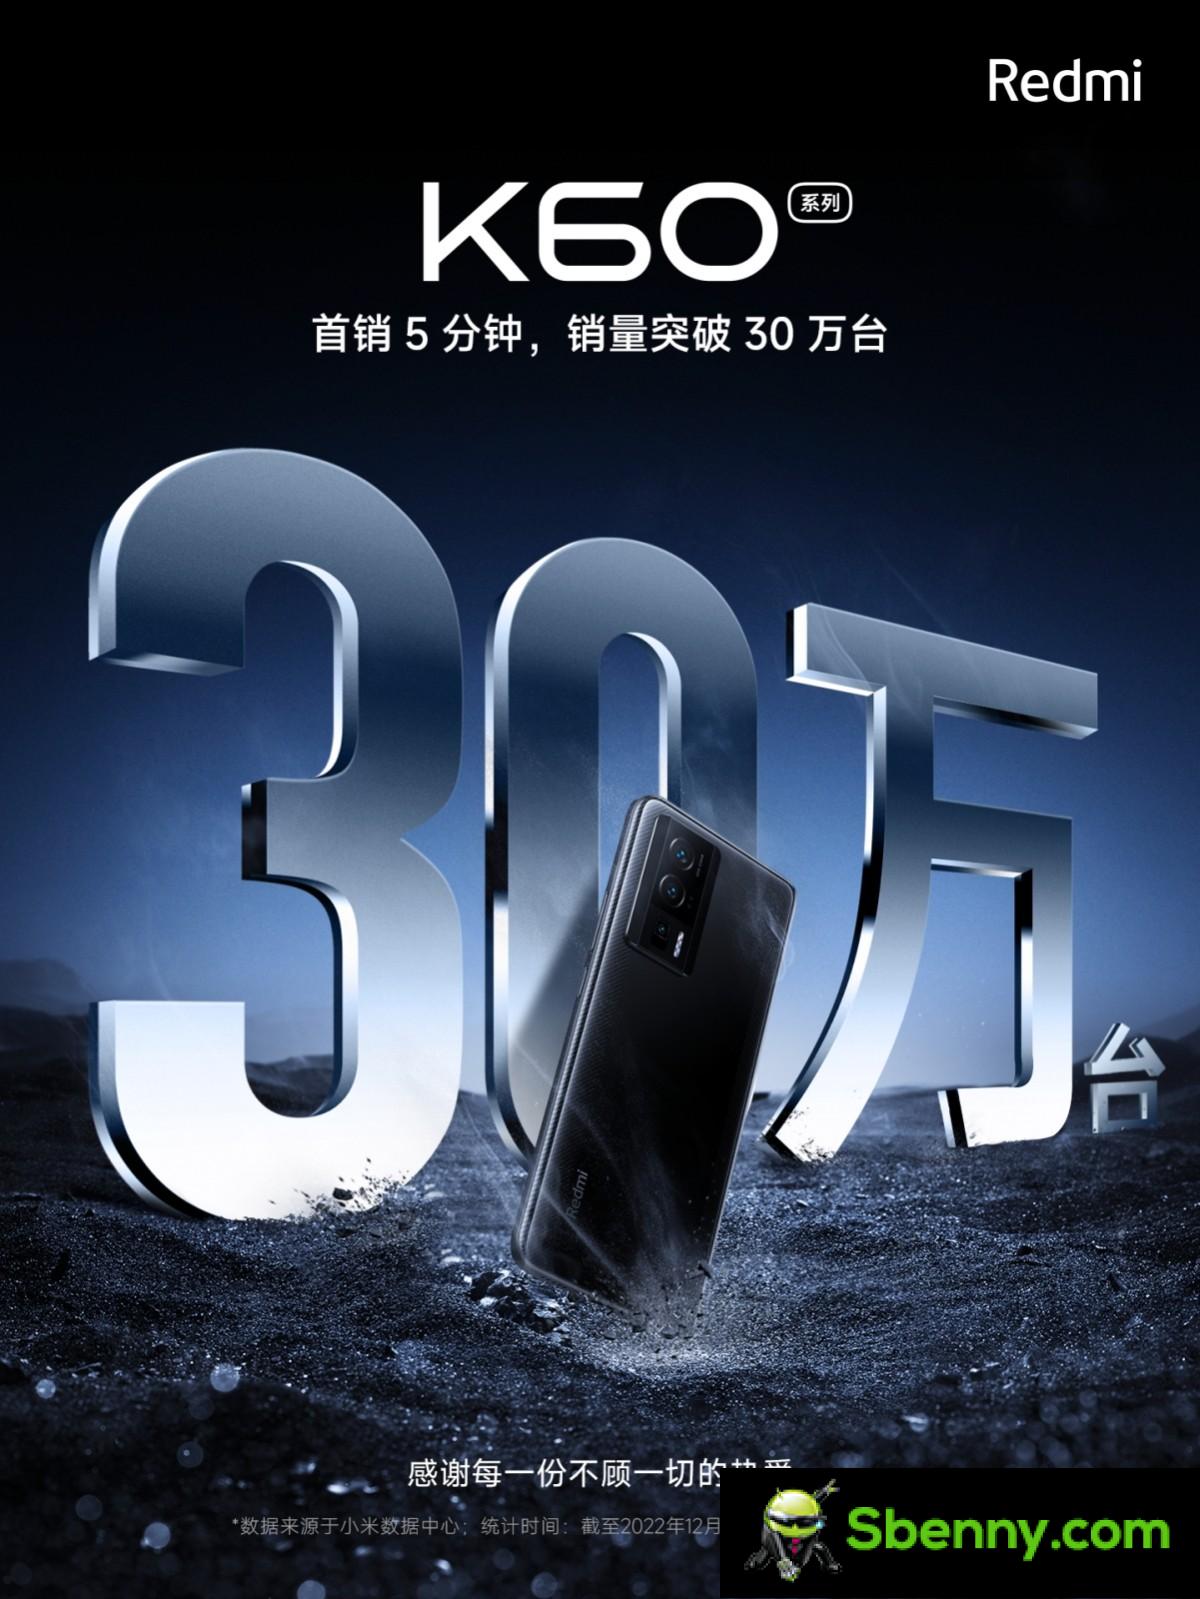 Xiaomi spinge 300,000 telefoni Redmi K60 in 5 minuti